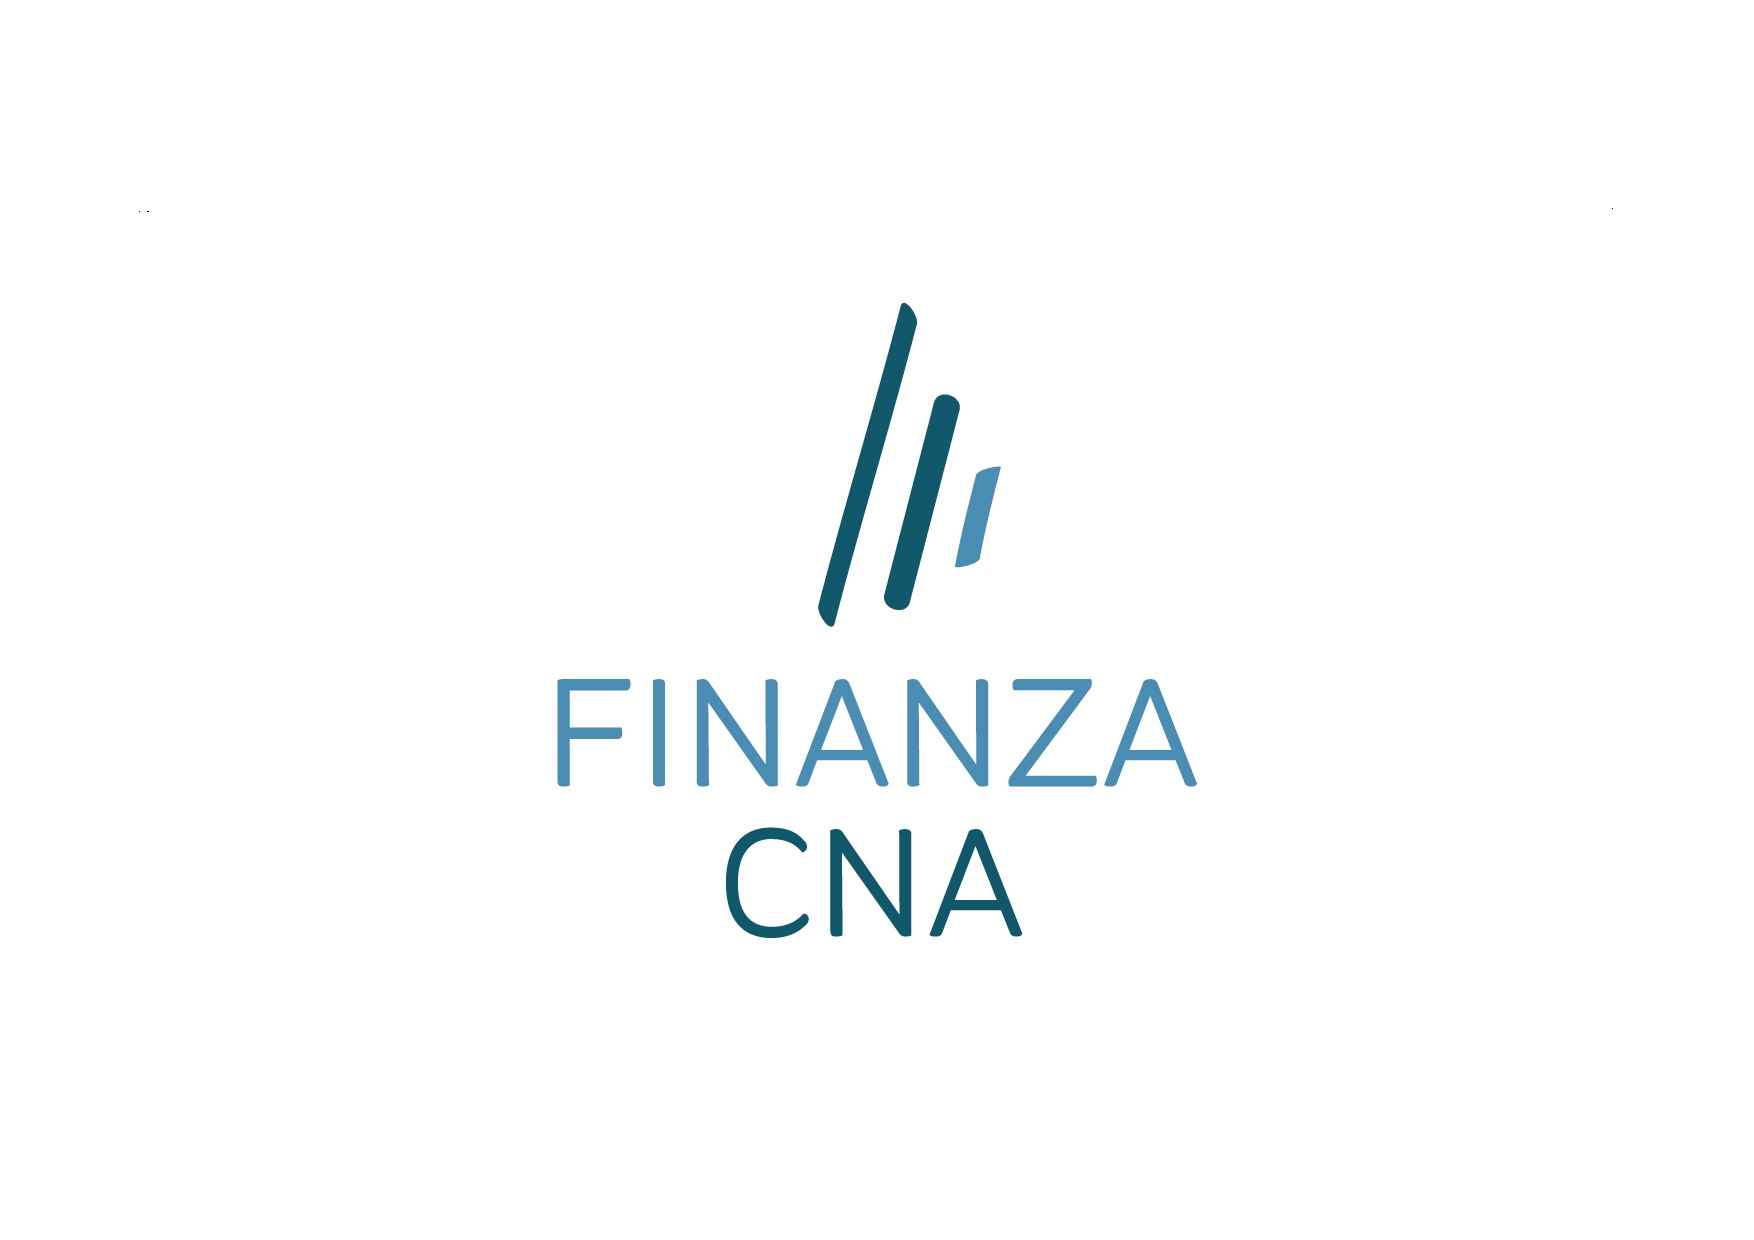 Finanza CNA